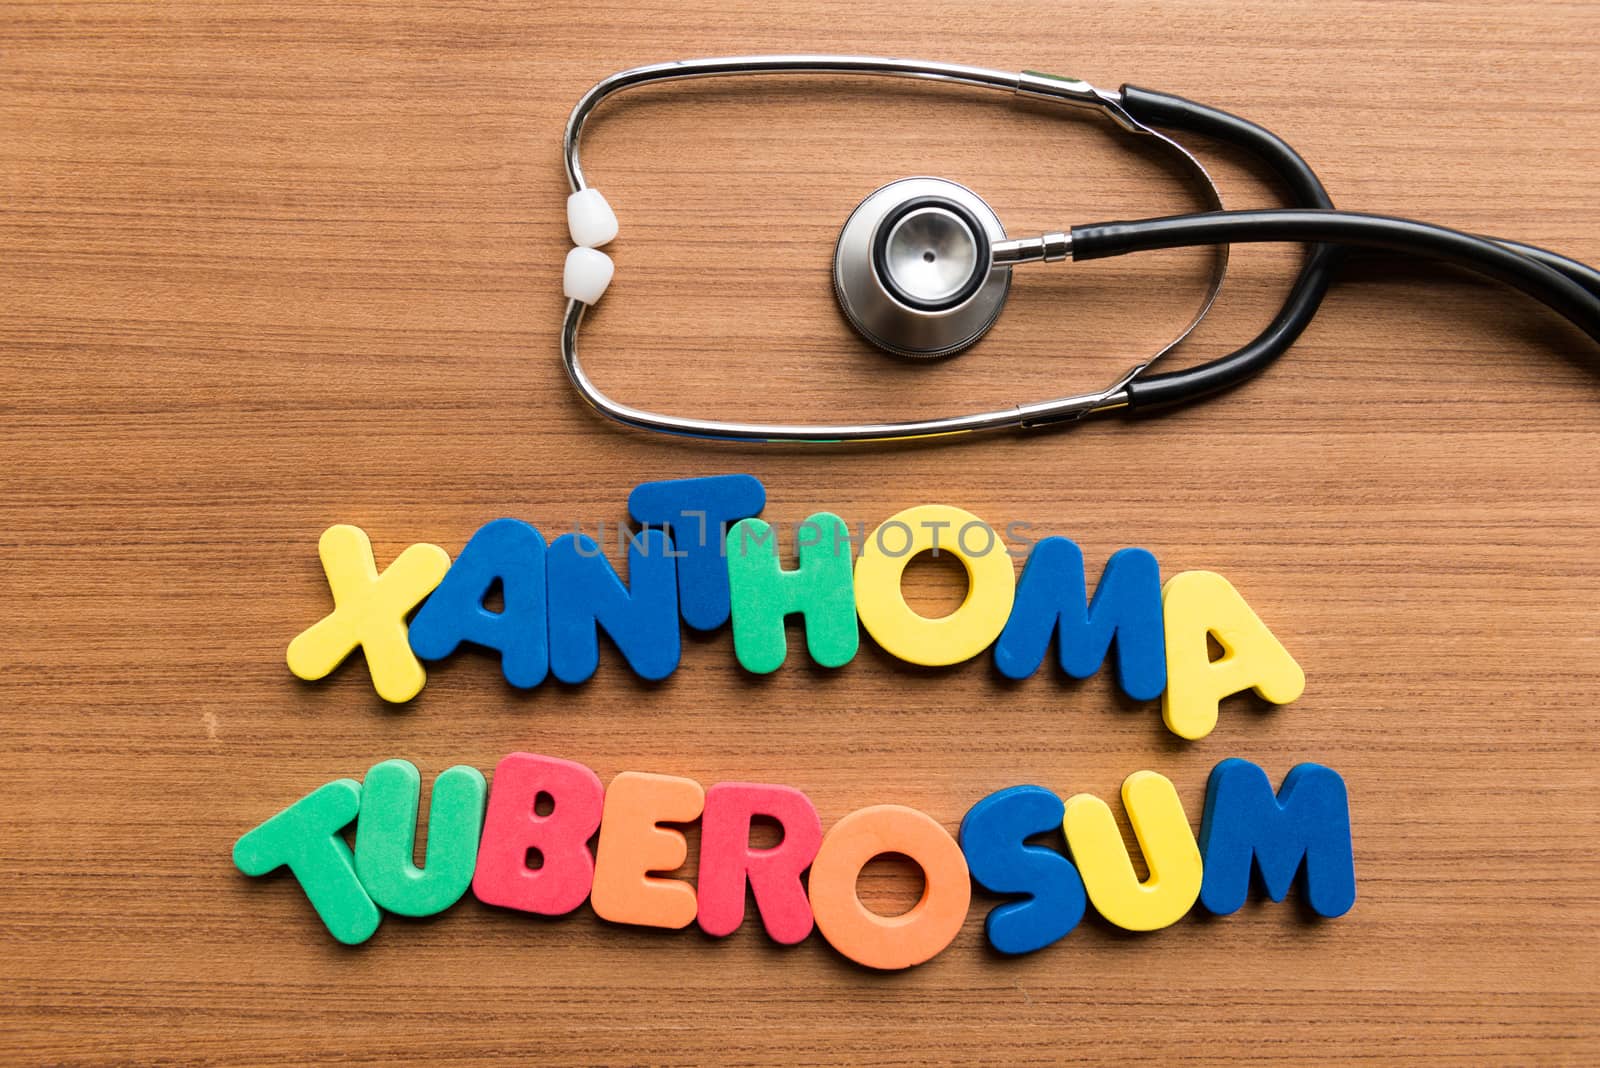 xanthoma tuberosum colorful word with stethoscope on wooden background